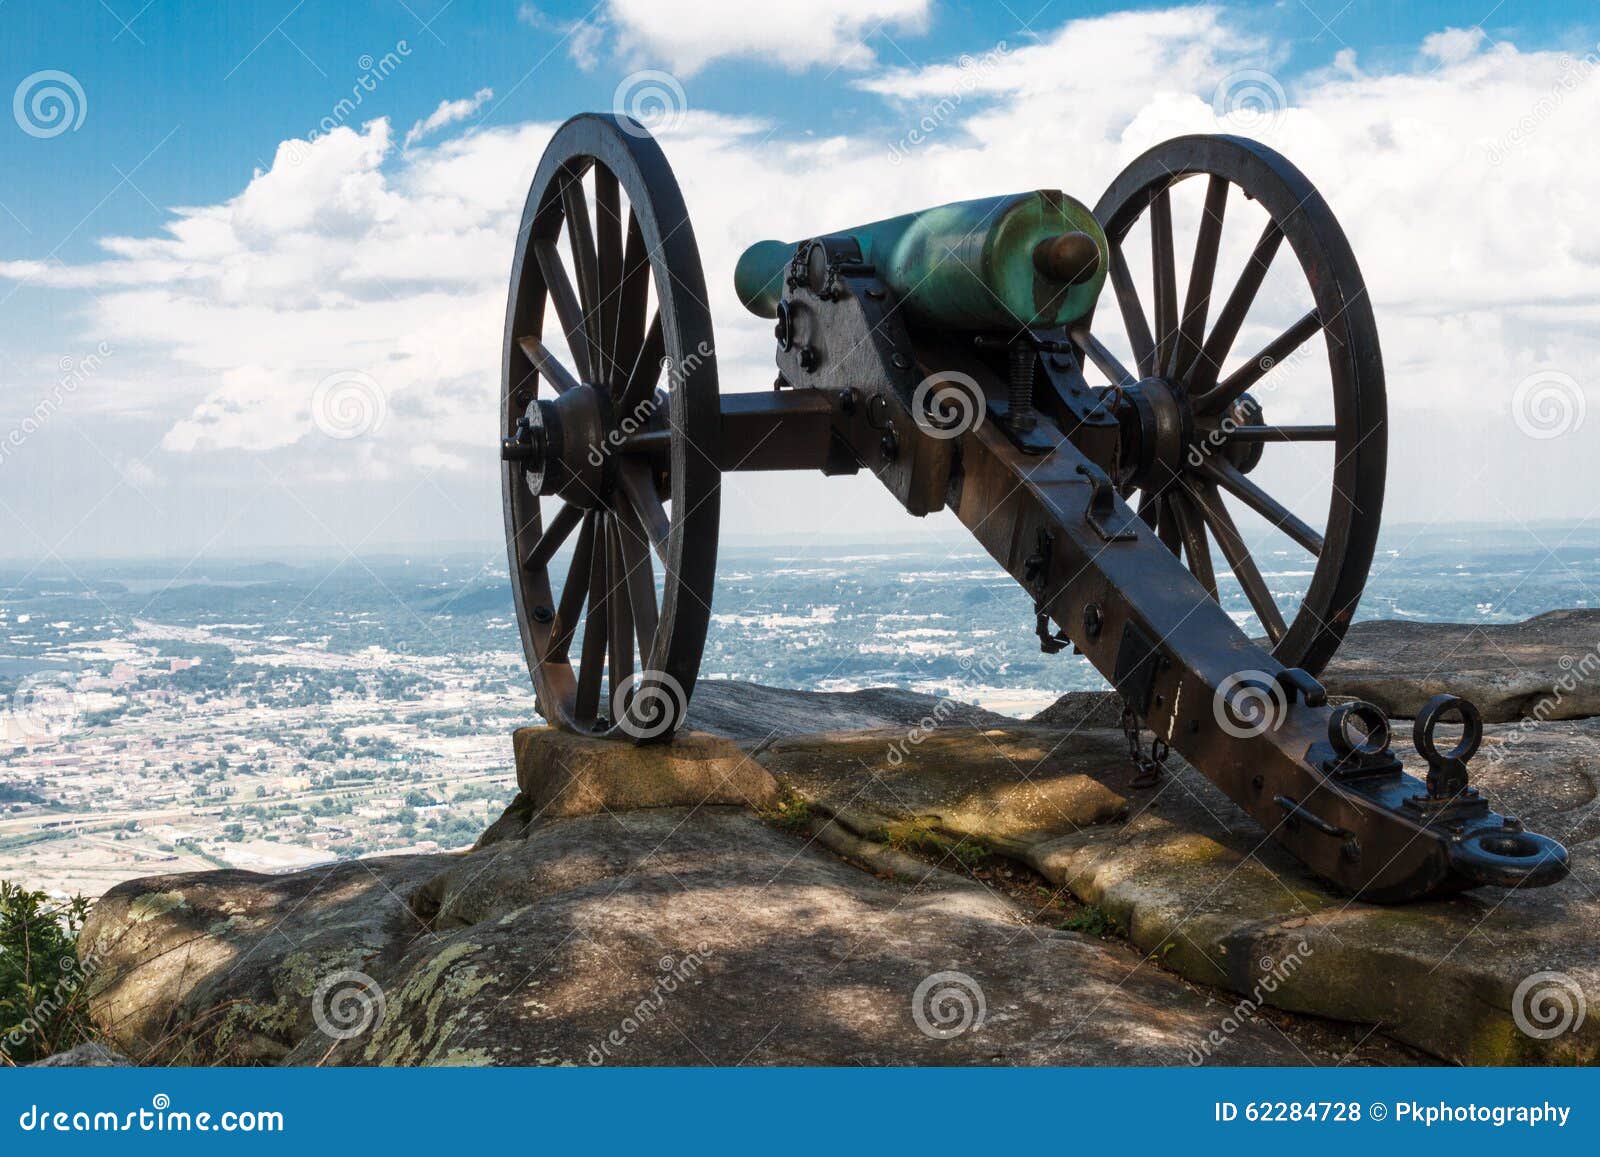 civil war era cannon atop lookout mountain, overlooks chattanooga tennessee